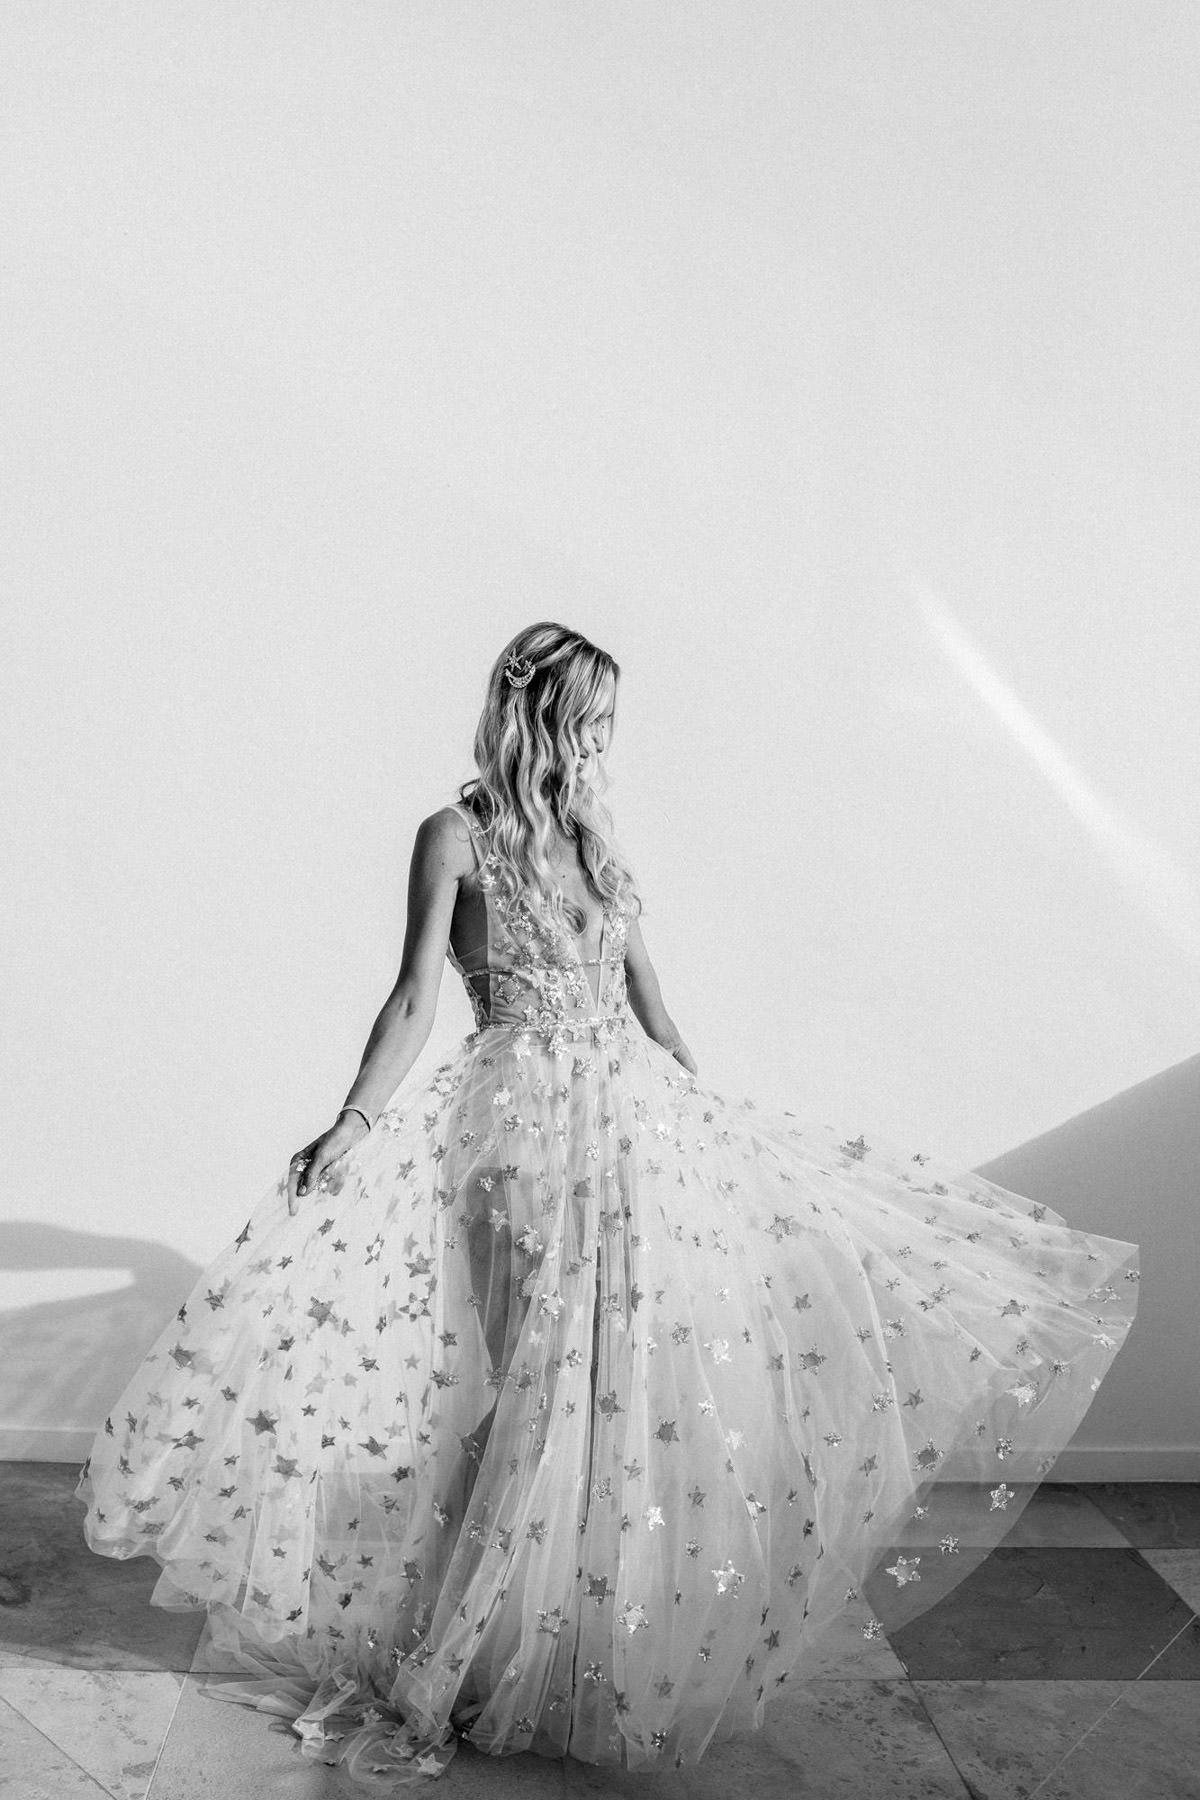 Riviera Maya wedding photographer captures these stunning bride portraits on her wedding gown.